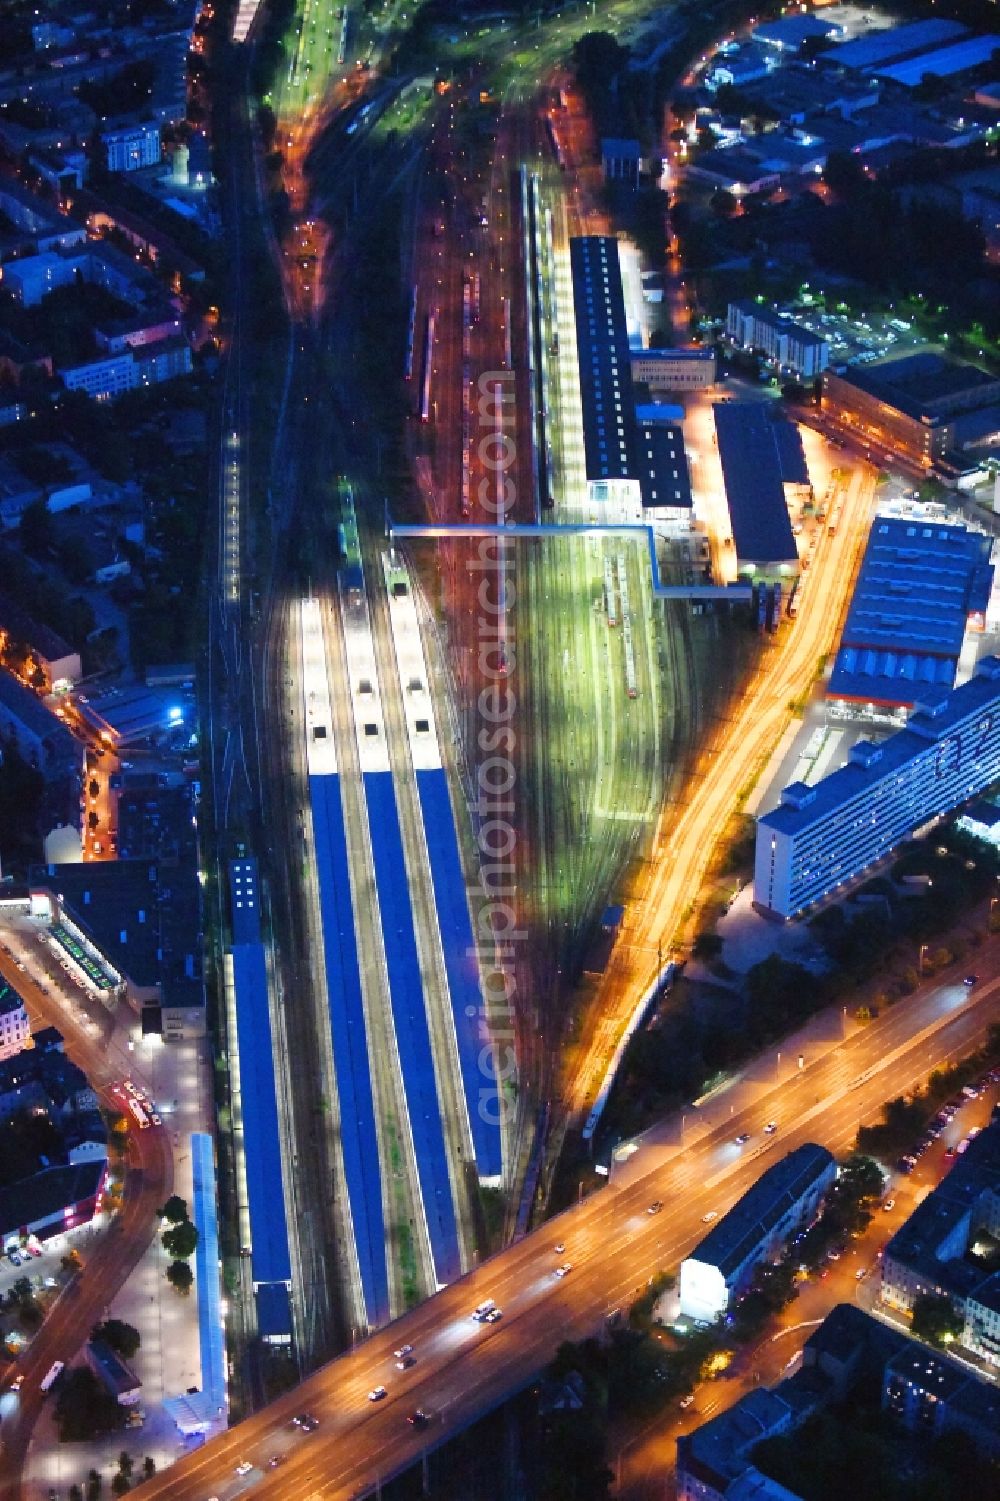 Aerial image at night Berlin - Night lighting Railway tracks and platforms of the station Lichtenberg in Berlin